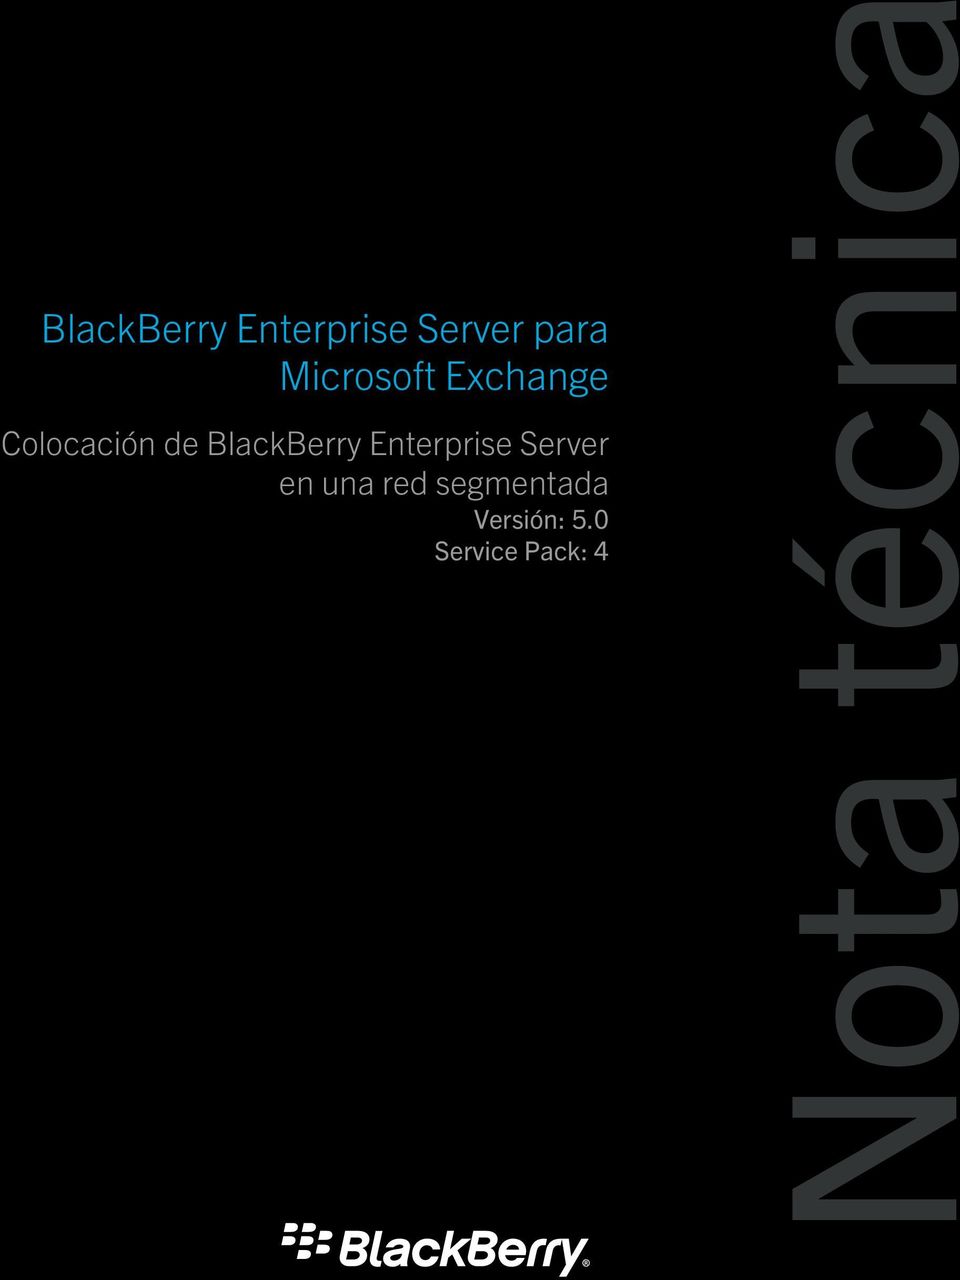 BlackBerry Enterprise Server en una red